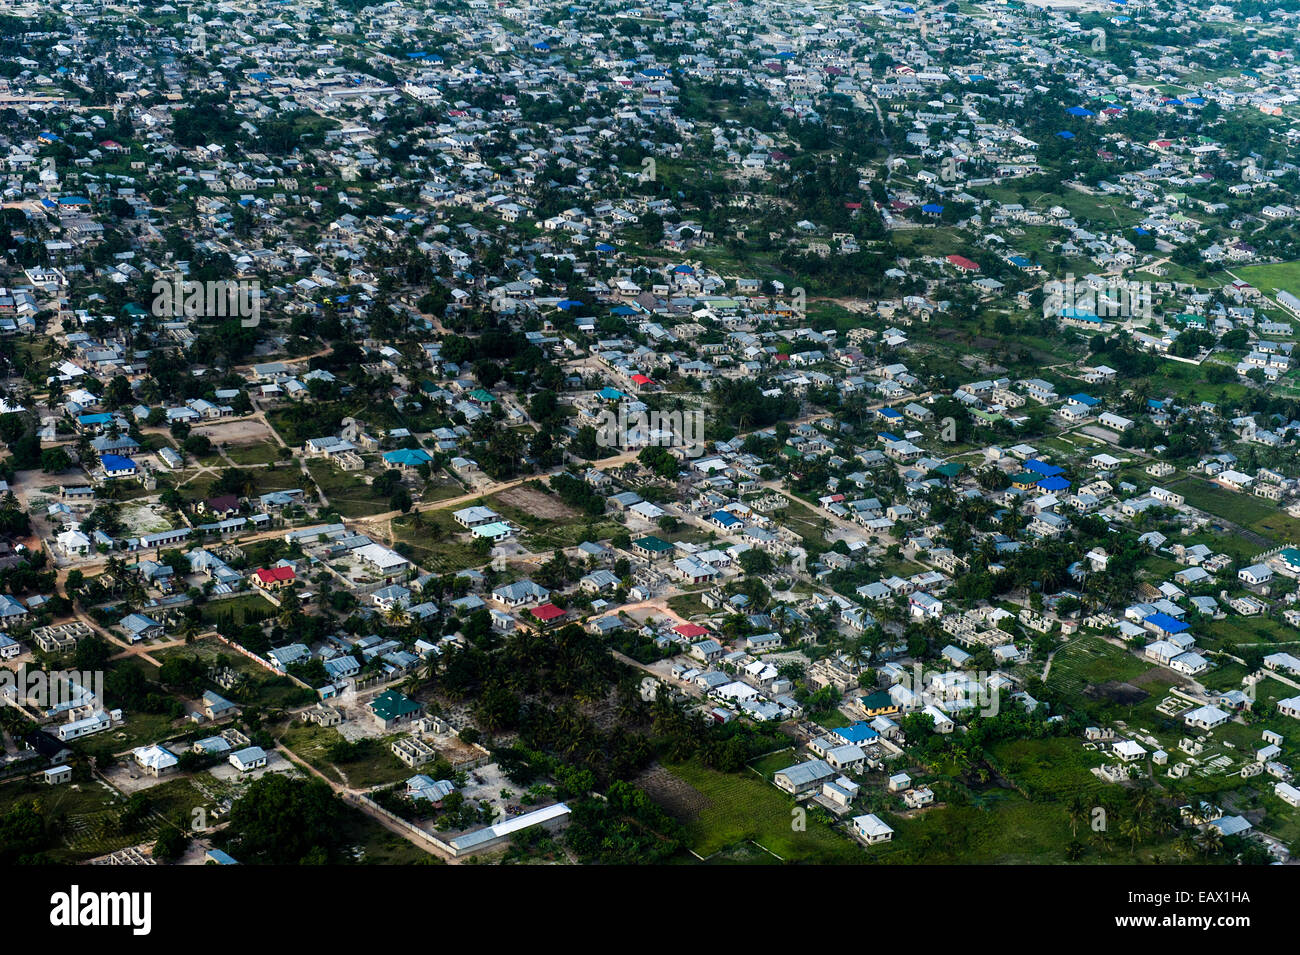 A densely populated community crowded around Dar es Salaam's urban sprawl. Stock Photo